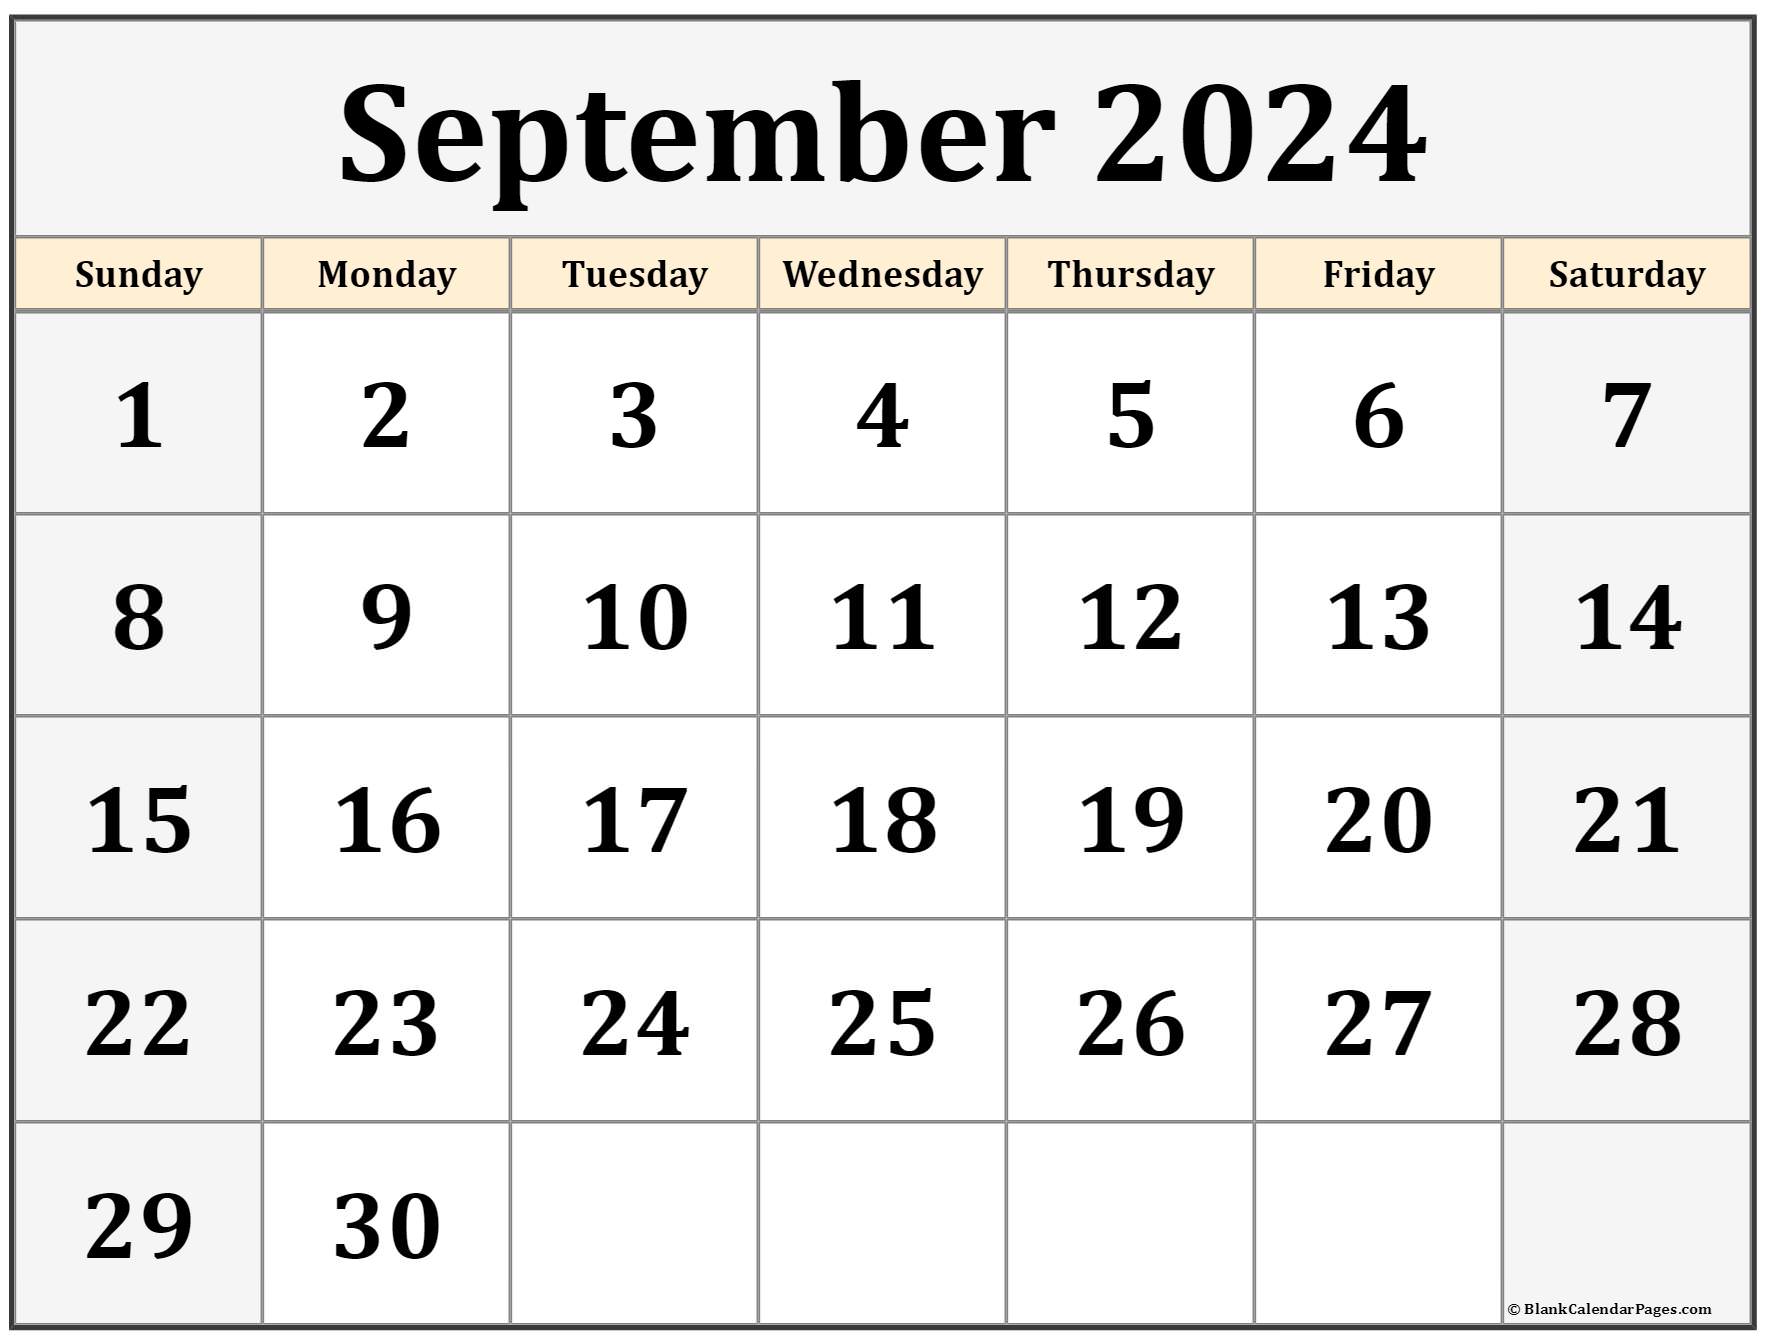 September 2022 calendar - free printable calendar templates